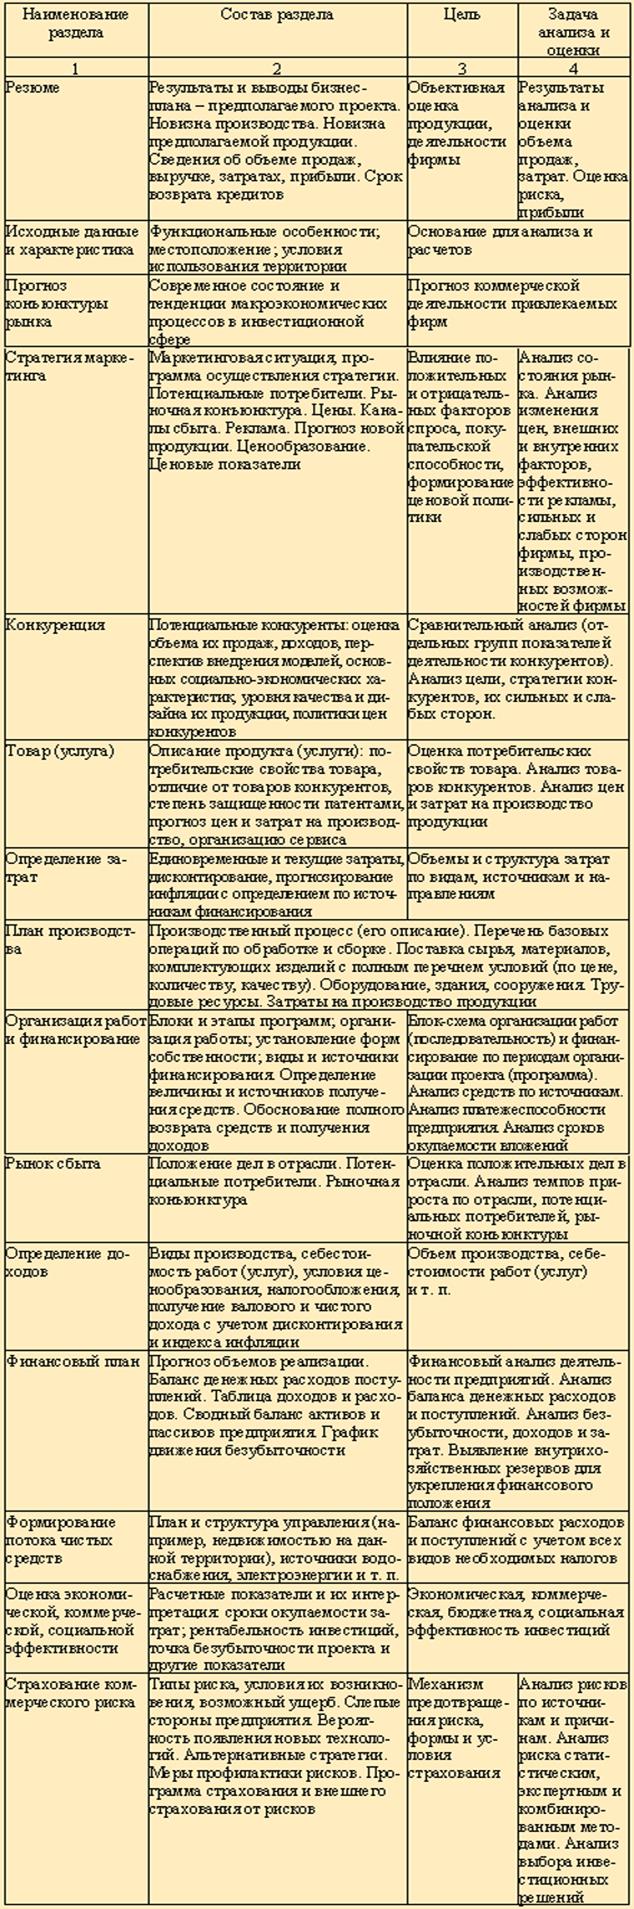 Общая схема анализа финансового состояния предприятия - student2.ru